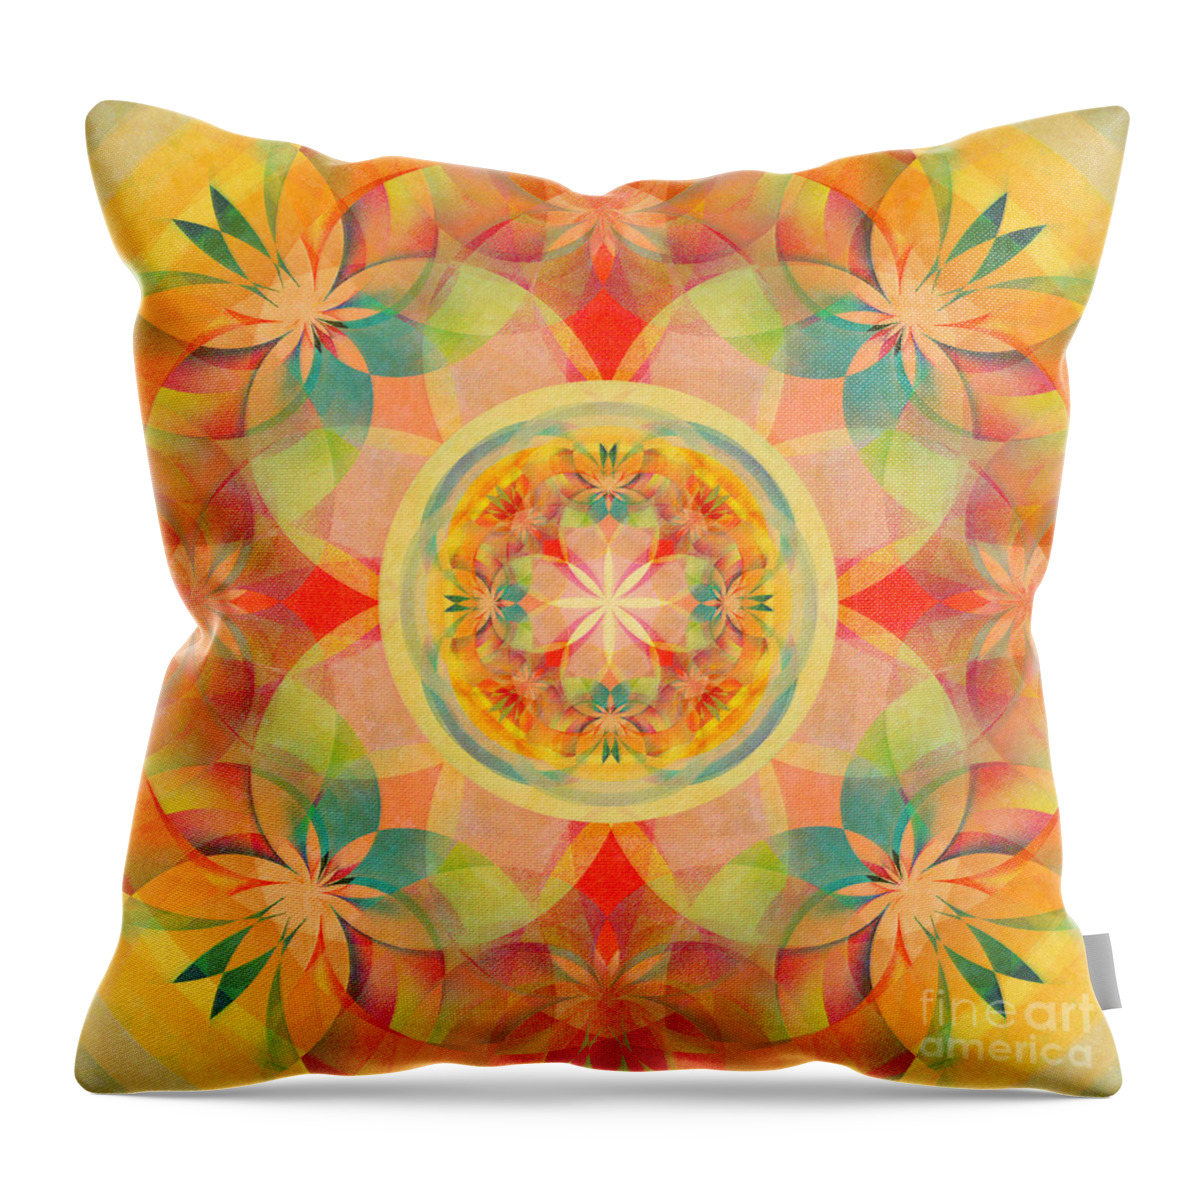 Abstract Throw Pillow featuring the digital art Lotus Mandala #1 by Klara Acel